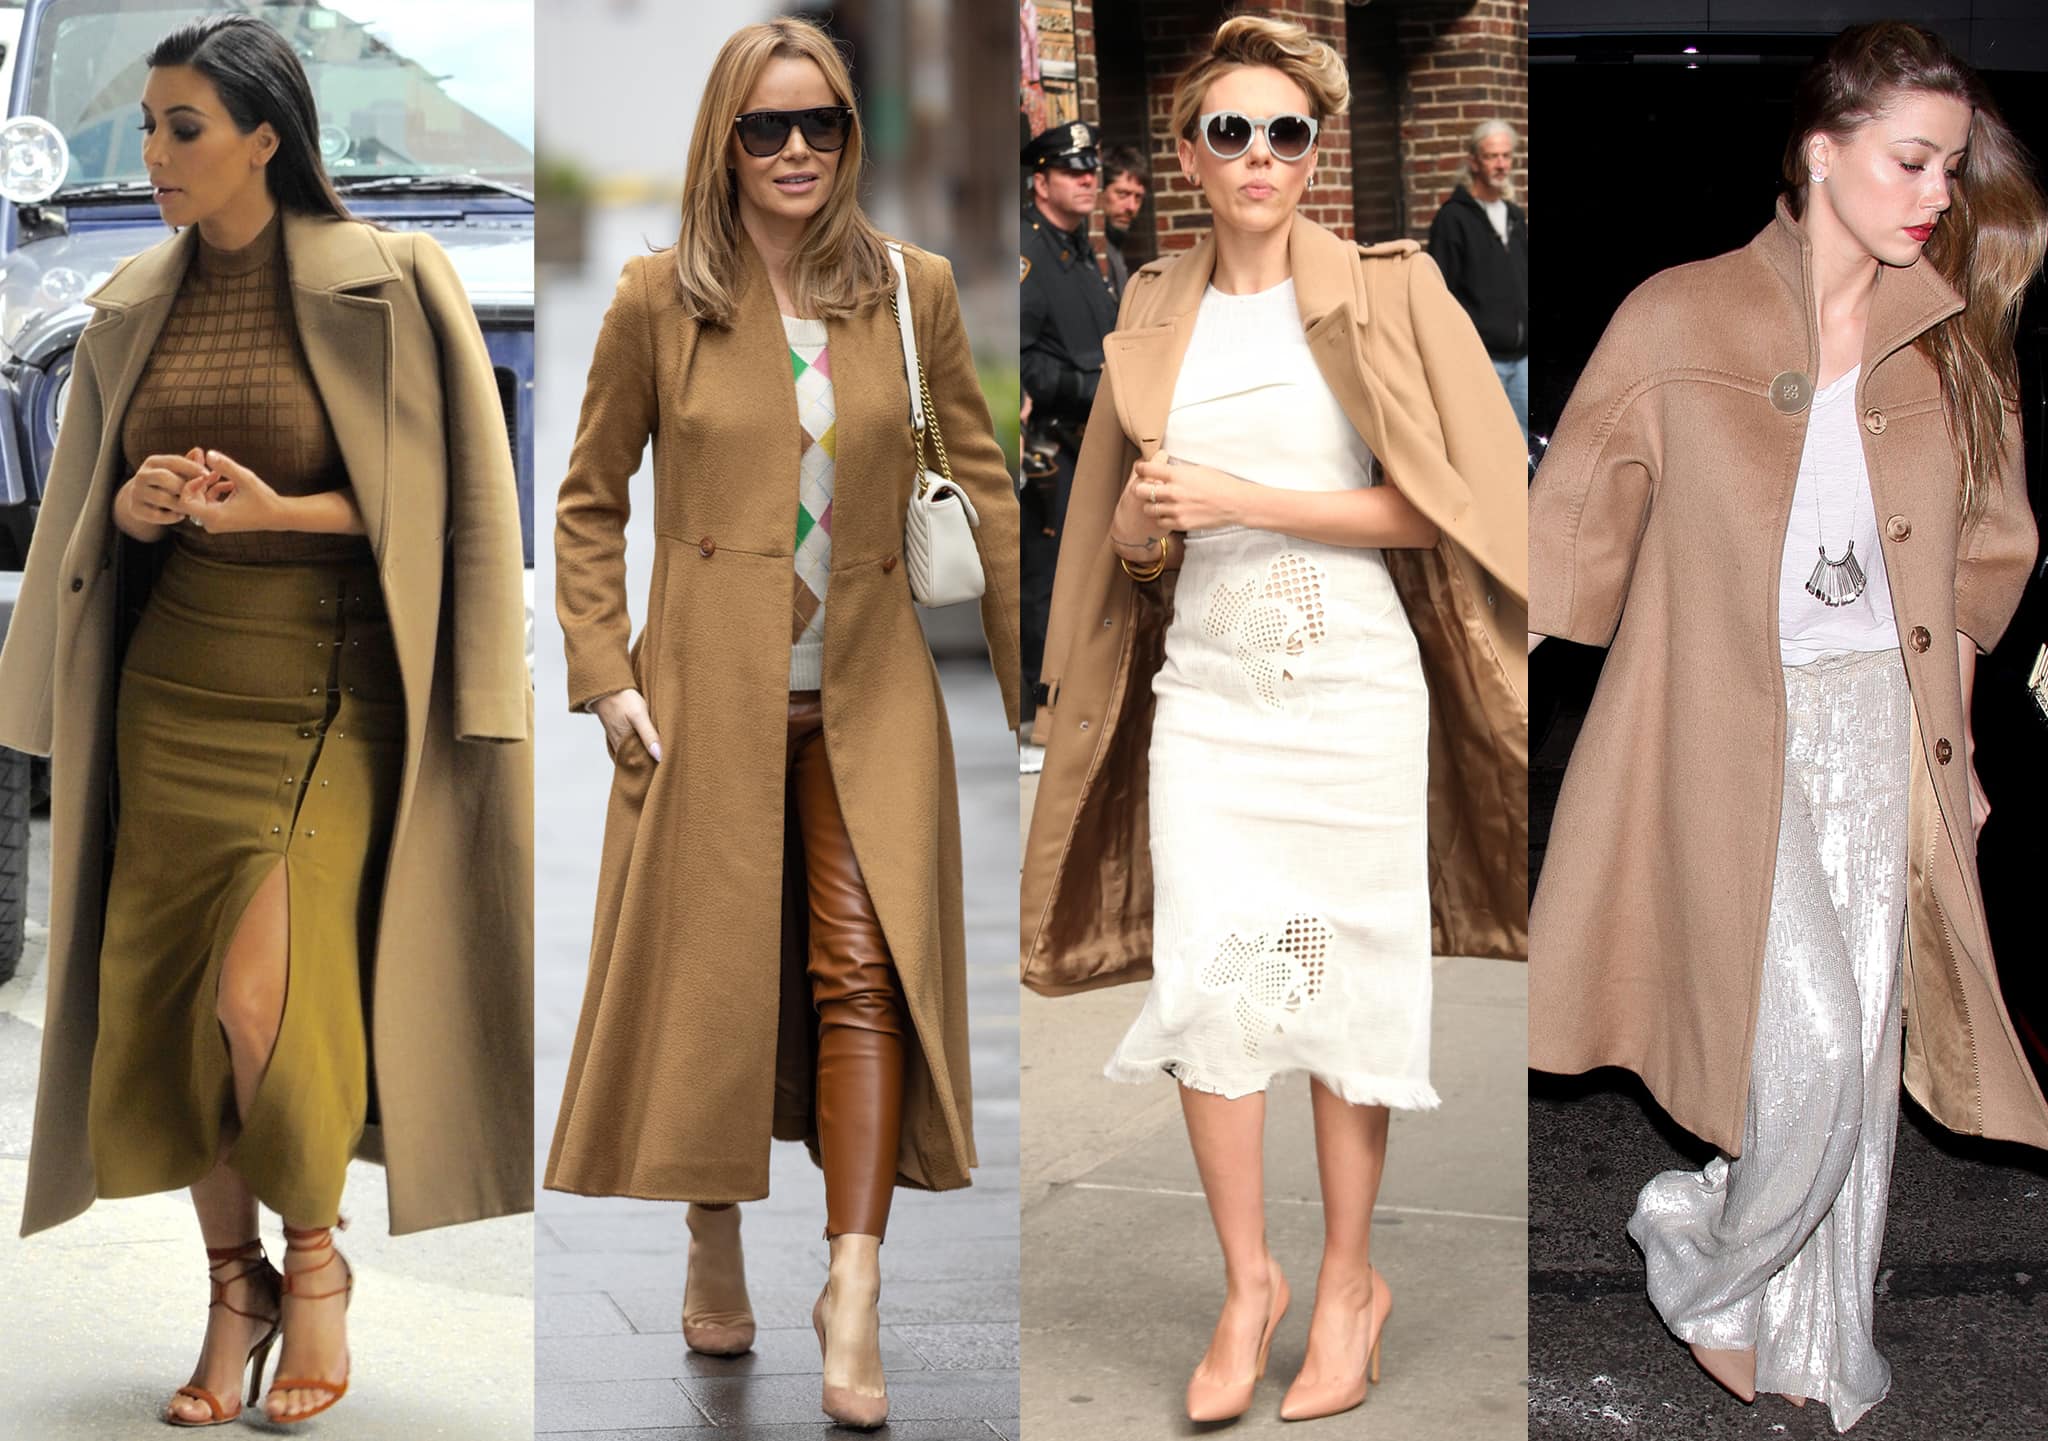 Kim Kardashian, Amanda Holden, Scarlett Johansson, and Amber Heard wear camel coats with neutral-colored outfits